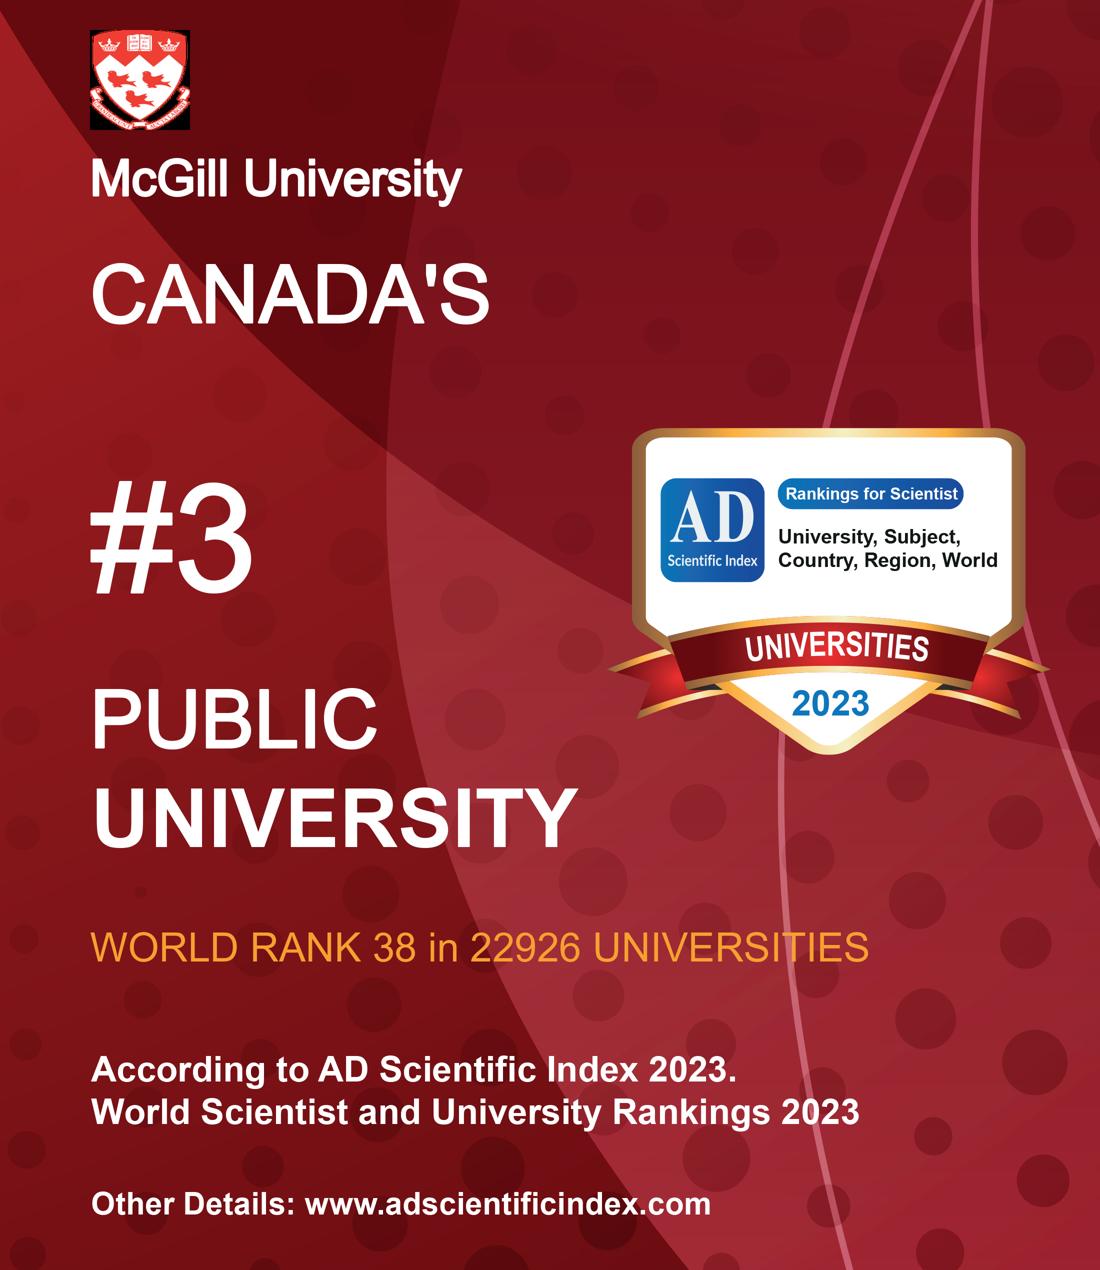 McGill University